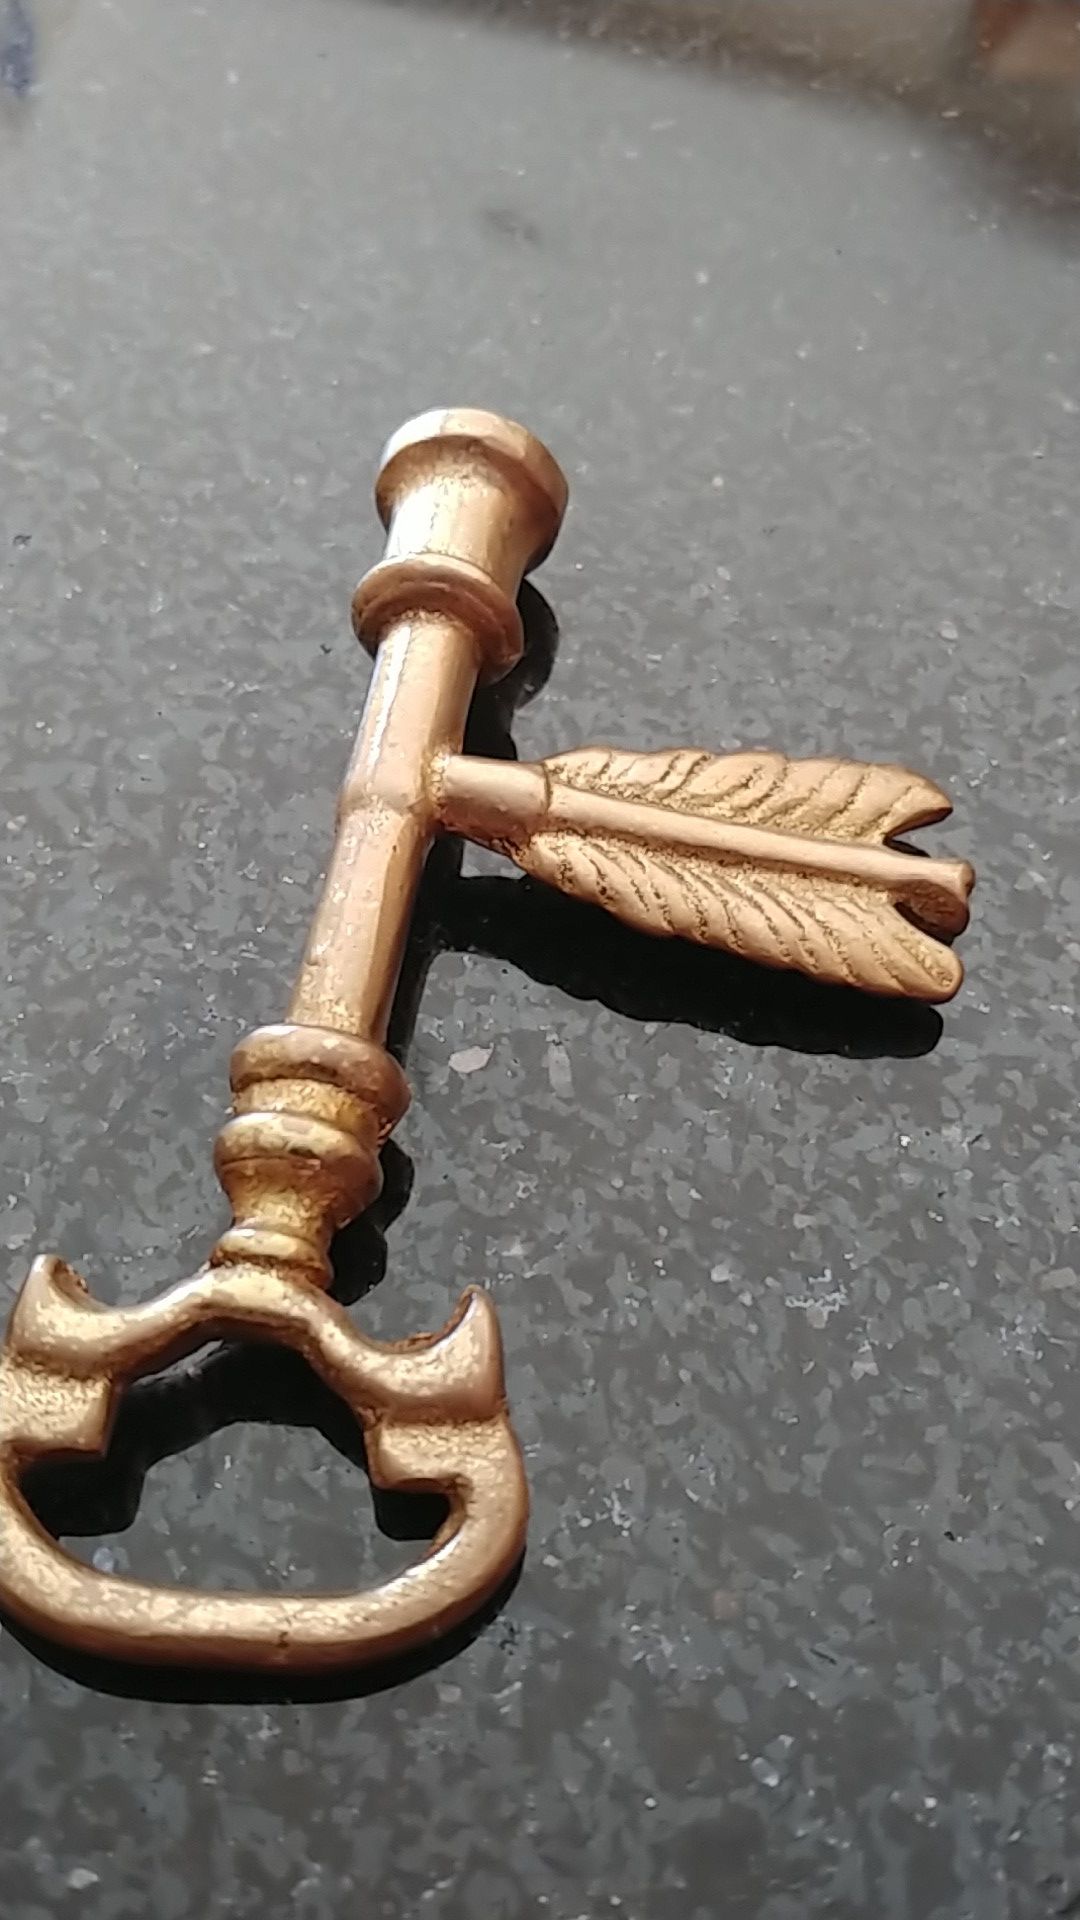 Rare Antique Bronze Key Handle for Furniture or Doors. Tirador antiguo de bronce raro en forma de llave para muebles o puertas.